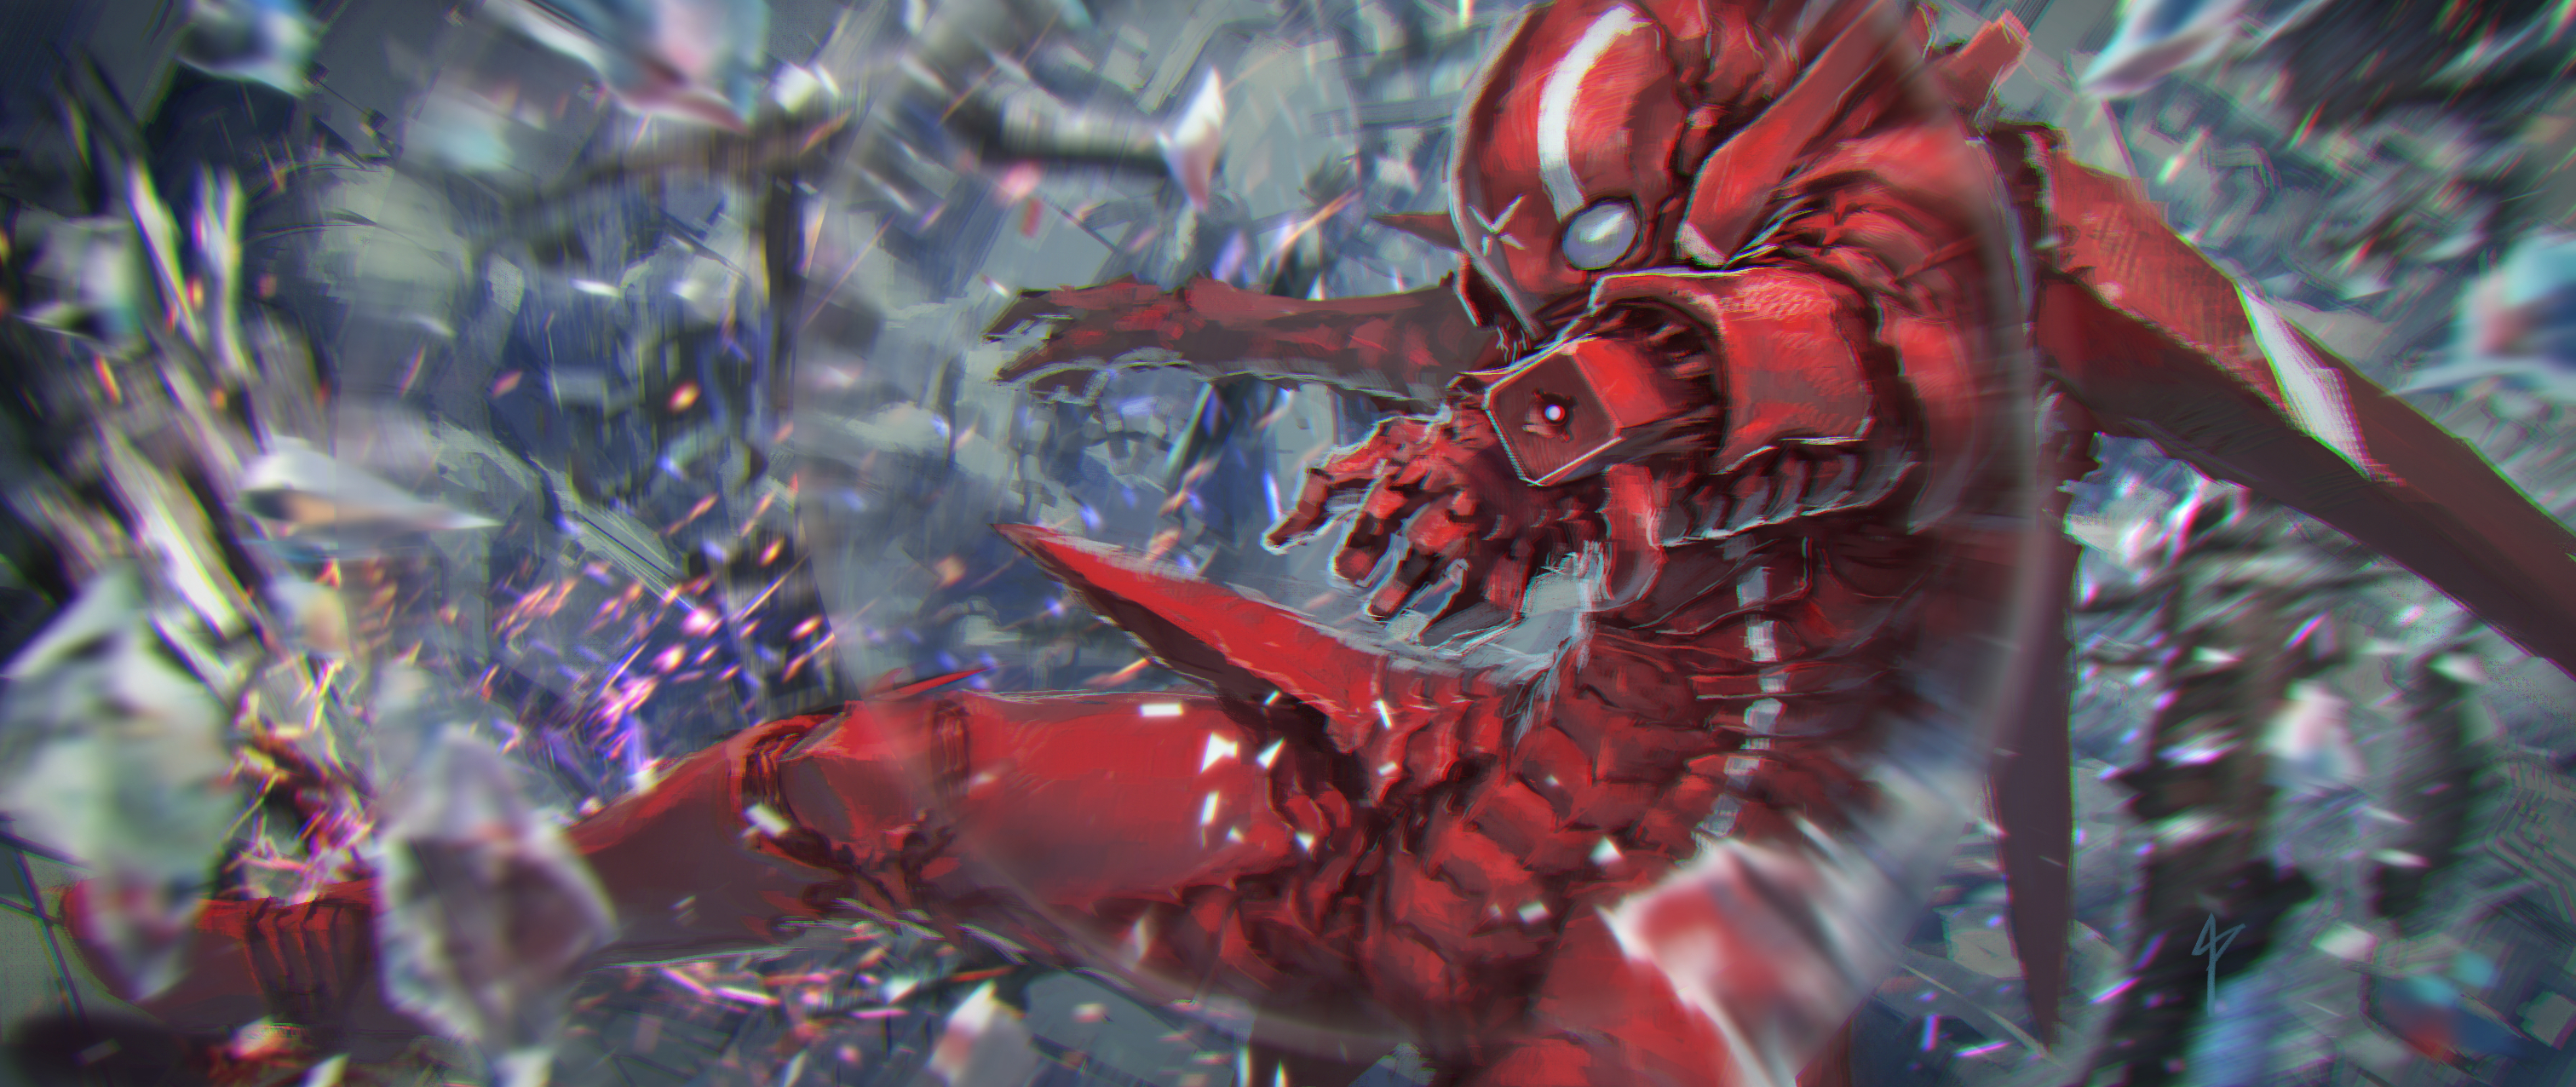 Digital Art Fantasy Art Artwork Science Fiction Futuristic Warrior Battle Space Battle Ultrawide 3024x1276